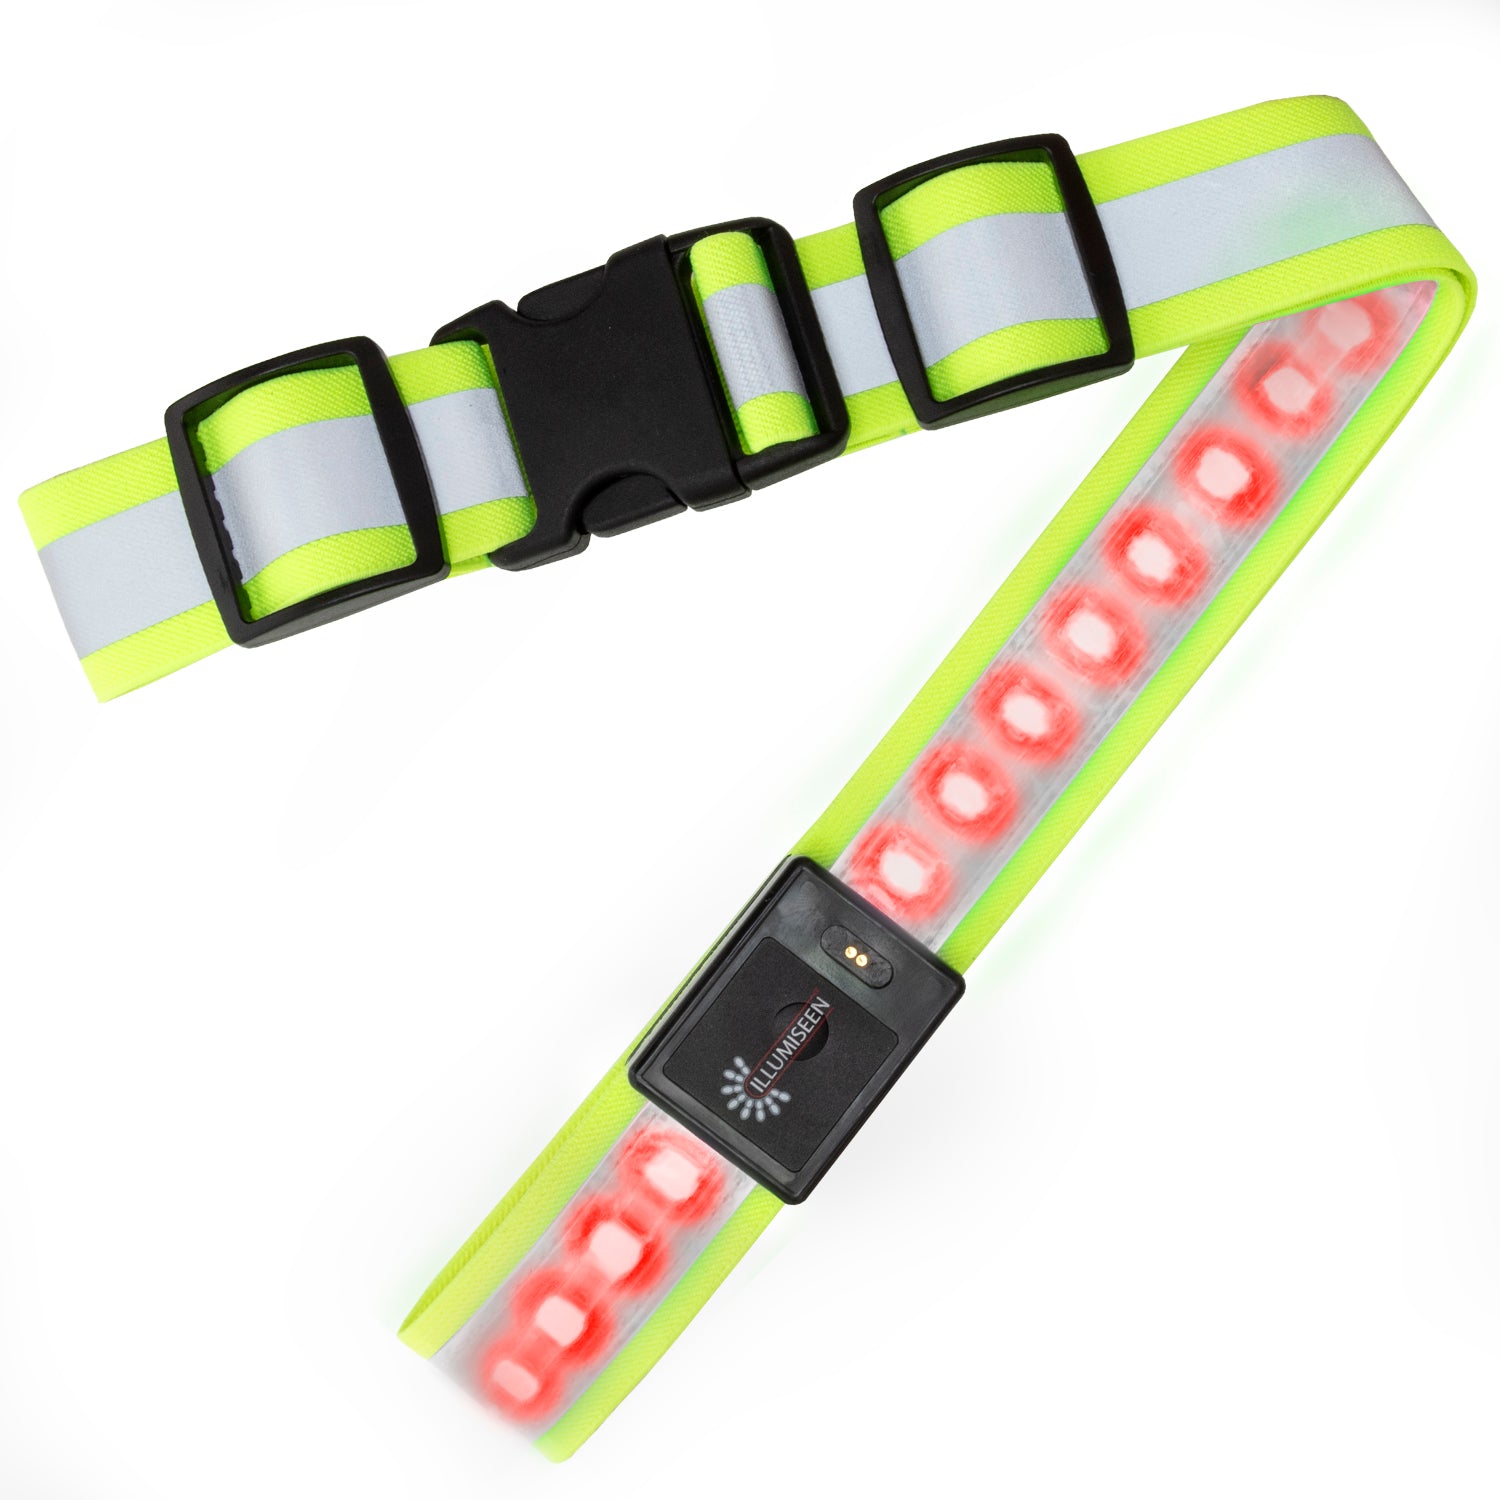 LED Belt 2.0 - 8 Bright LED Colors in One Safety Belt - Illumiseen